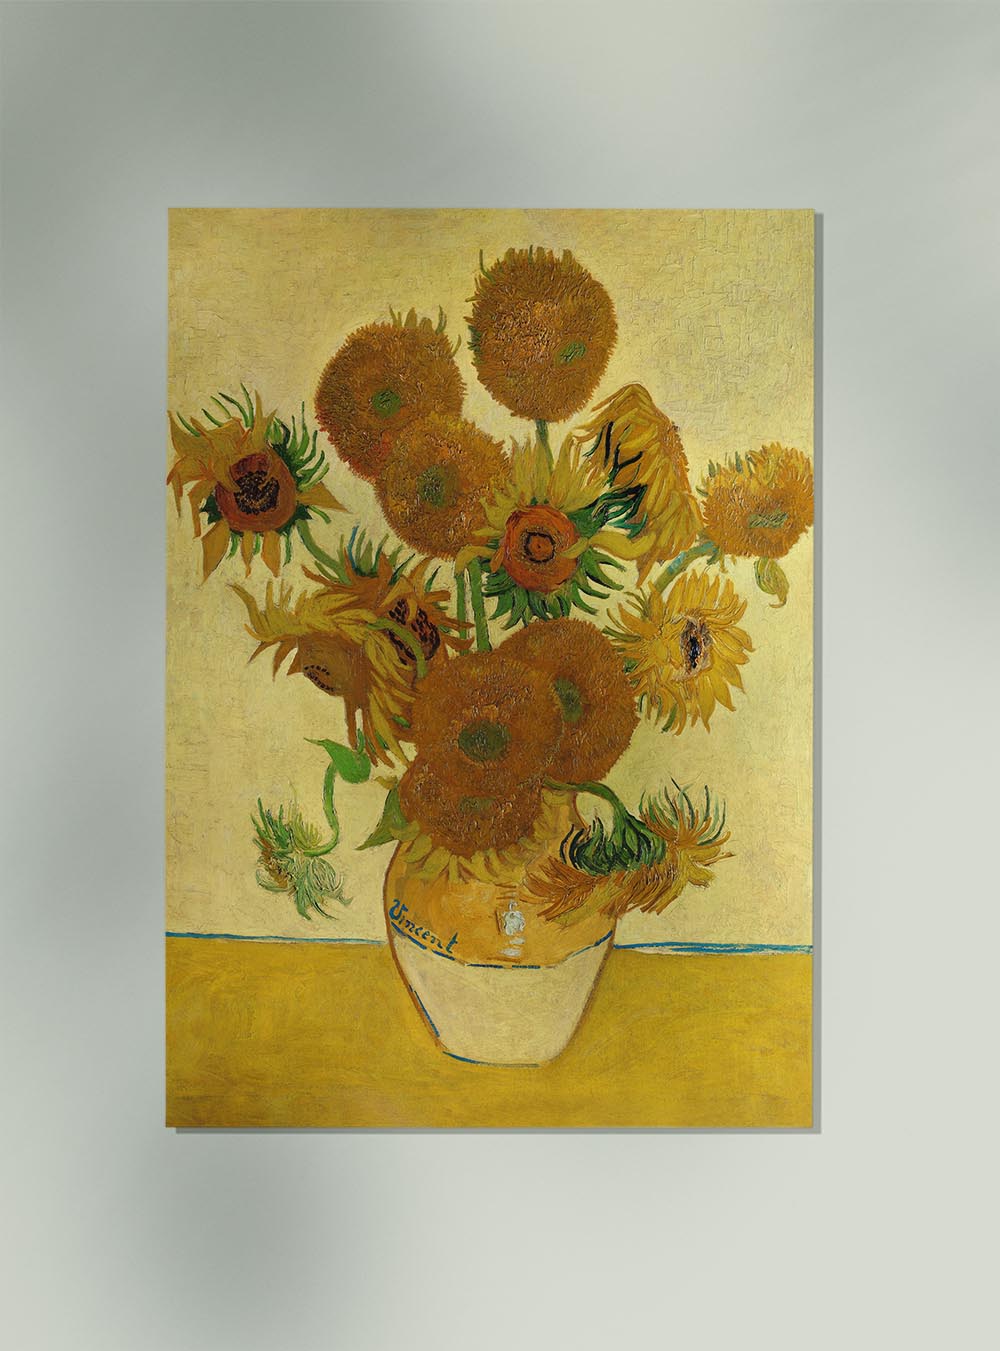 Sunflowers Art Print by Van Gogh